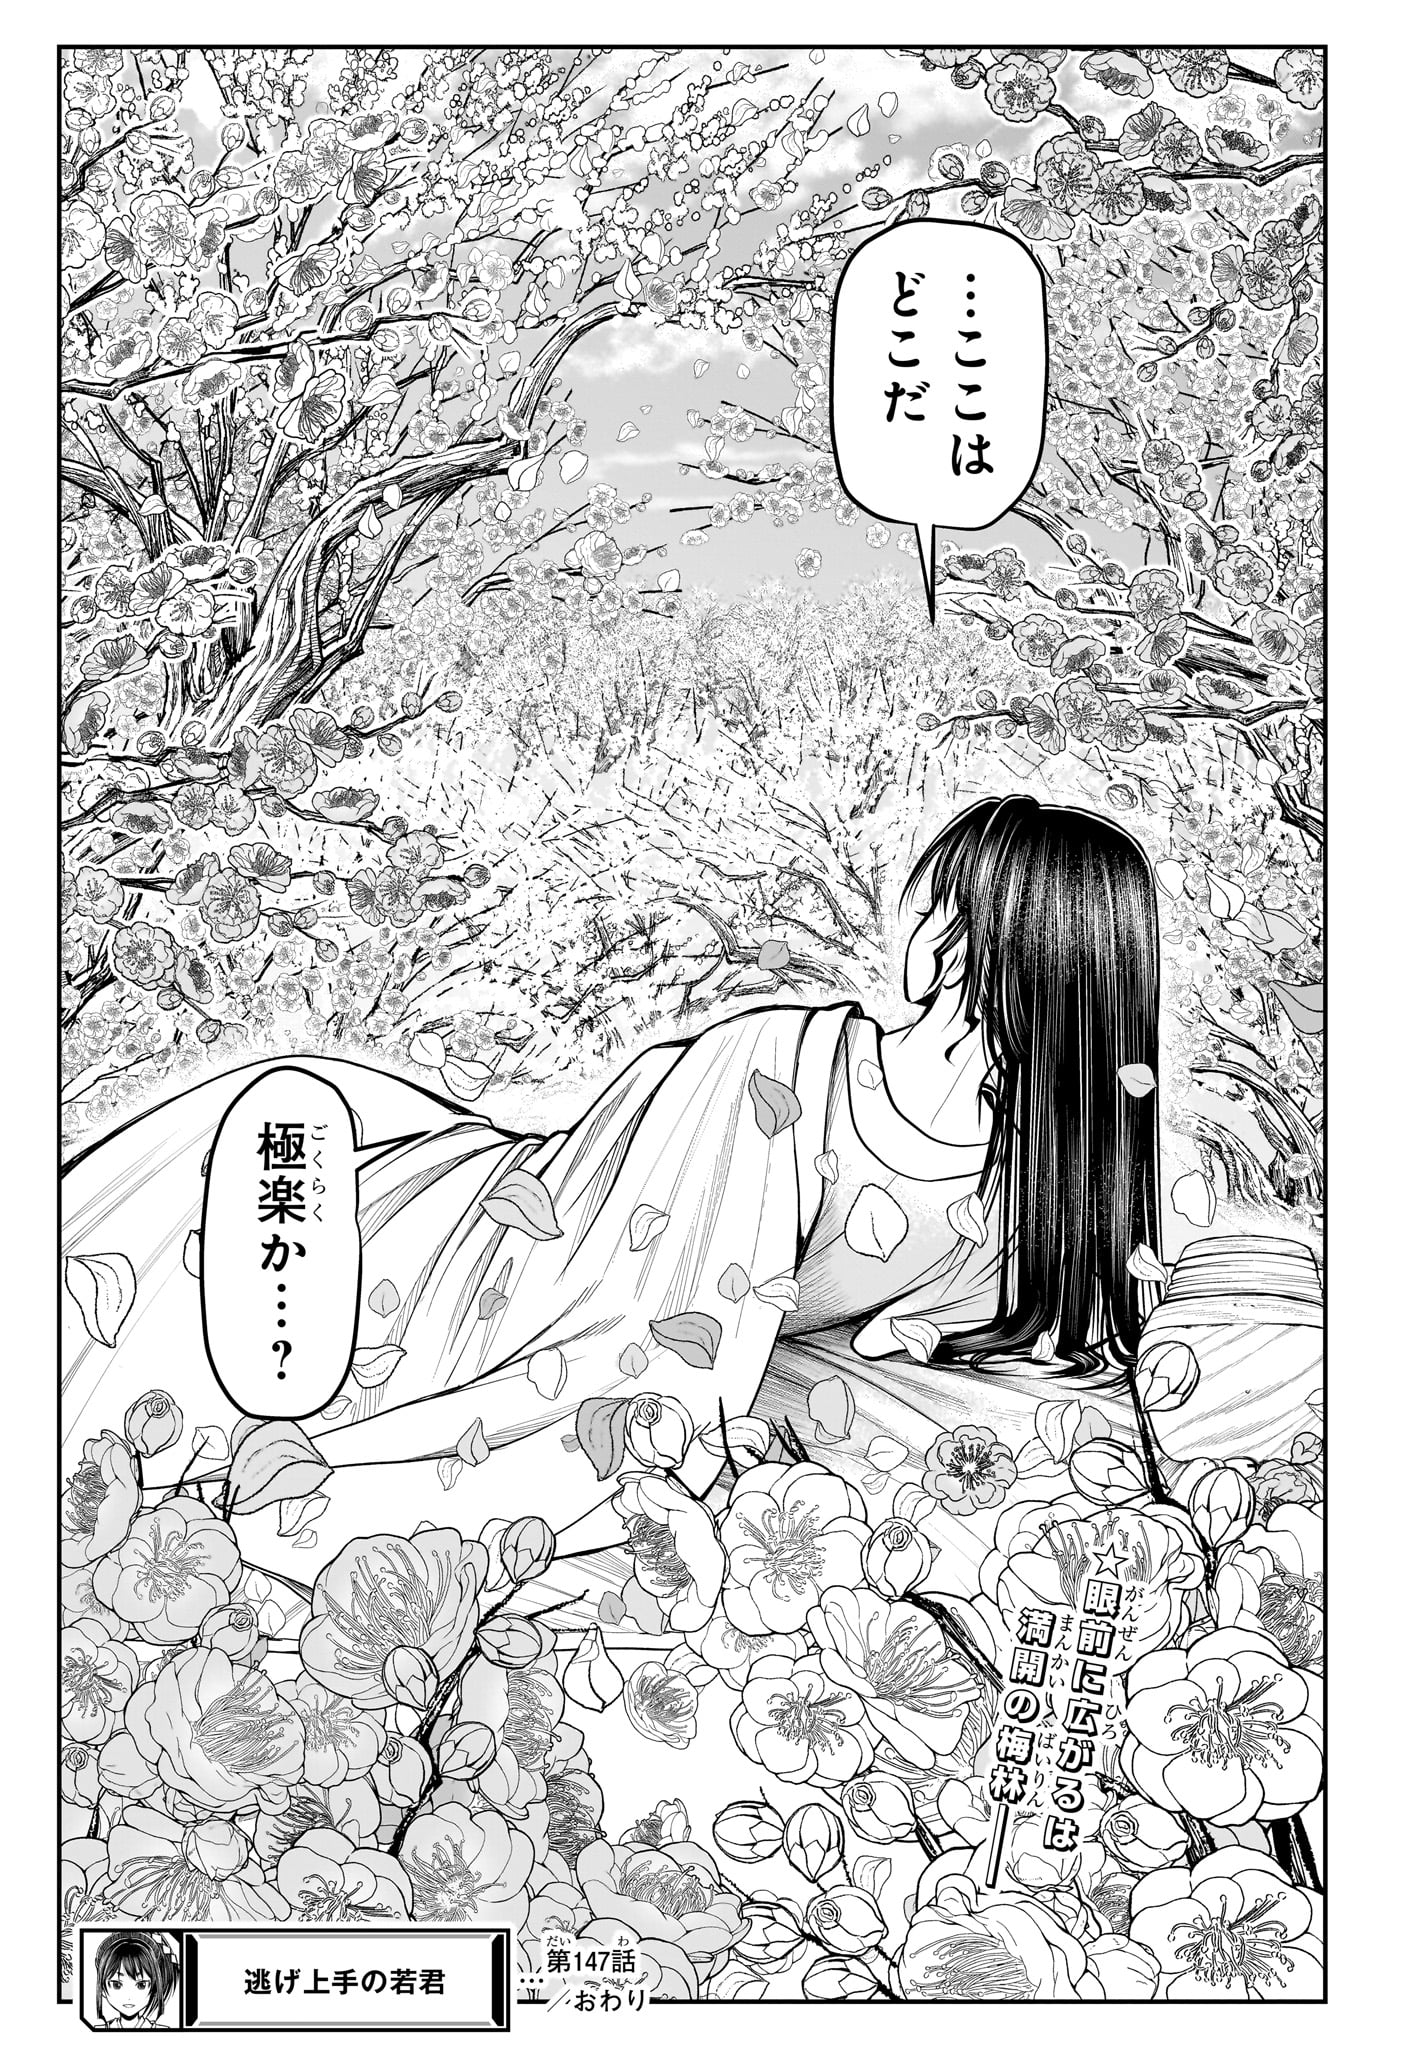 Nige Jouzu no Wakagimi - Chapter 147 - Page 19